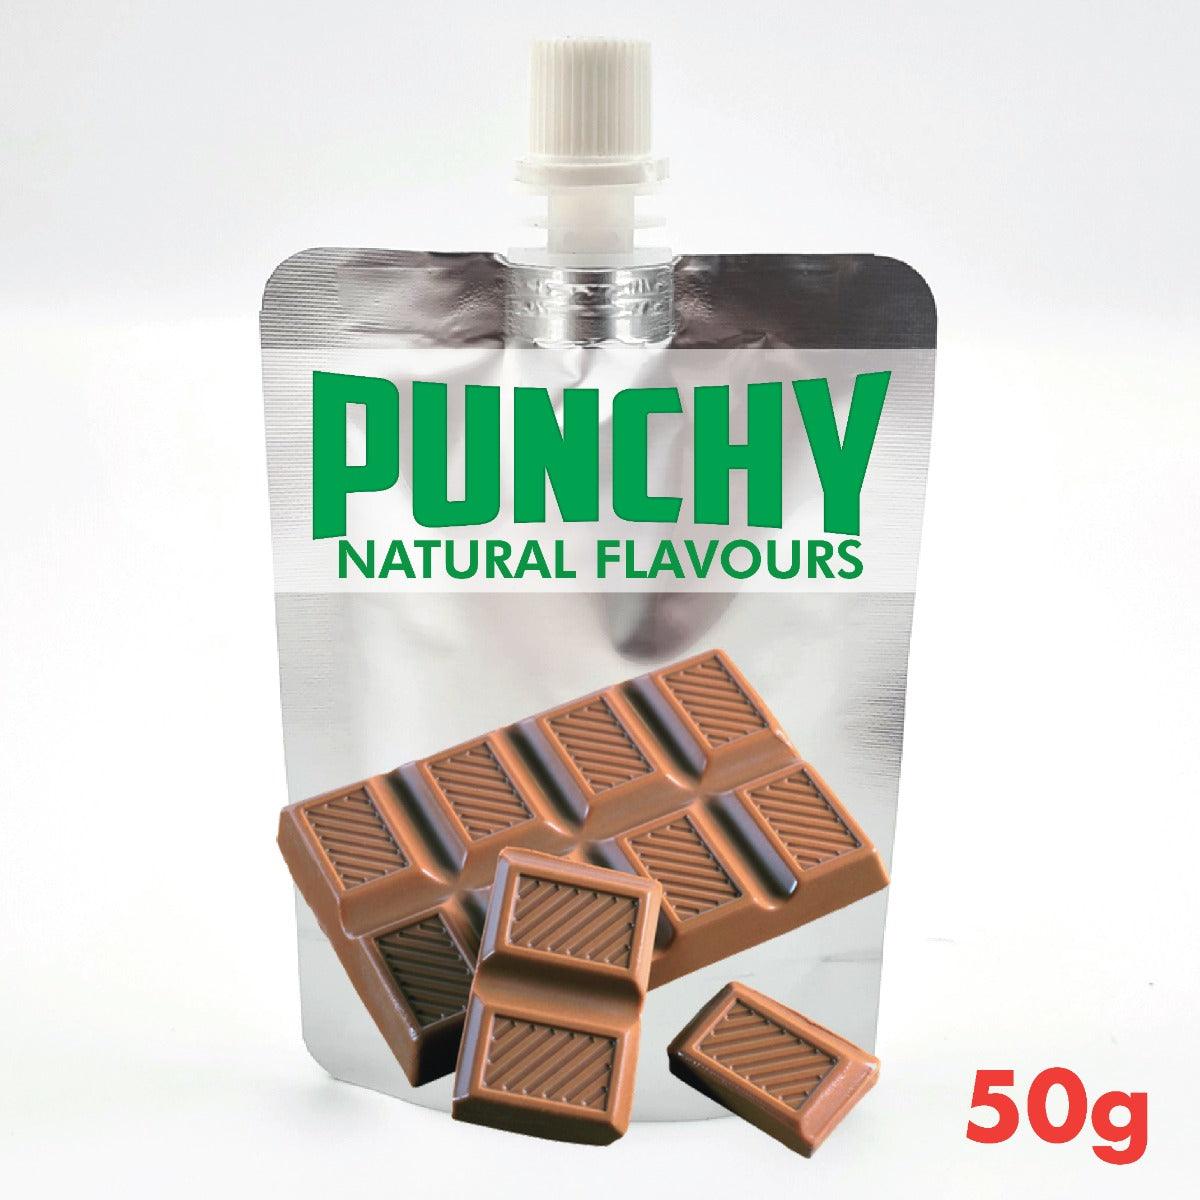 PUNCHY - Milk Chocolate Flavour Natural - 100ml - KegLand